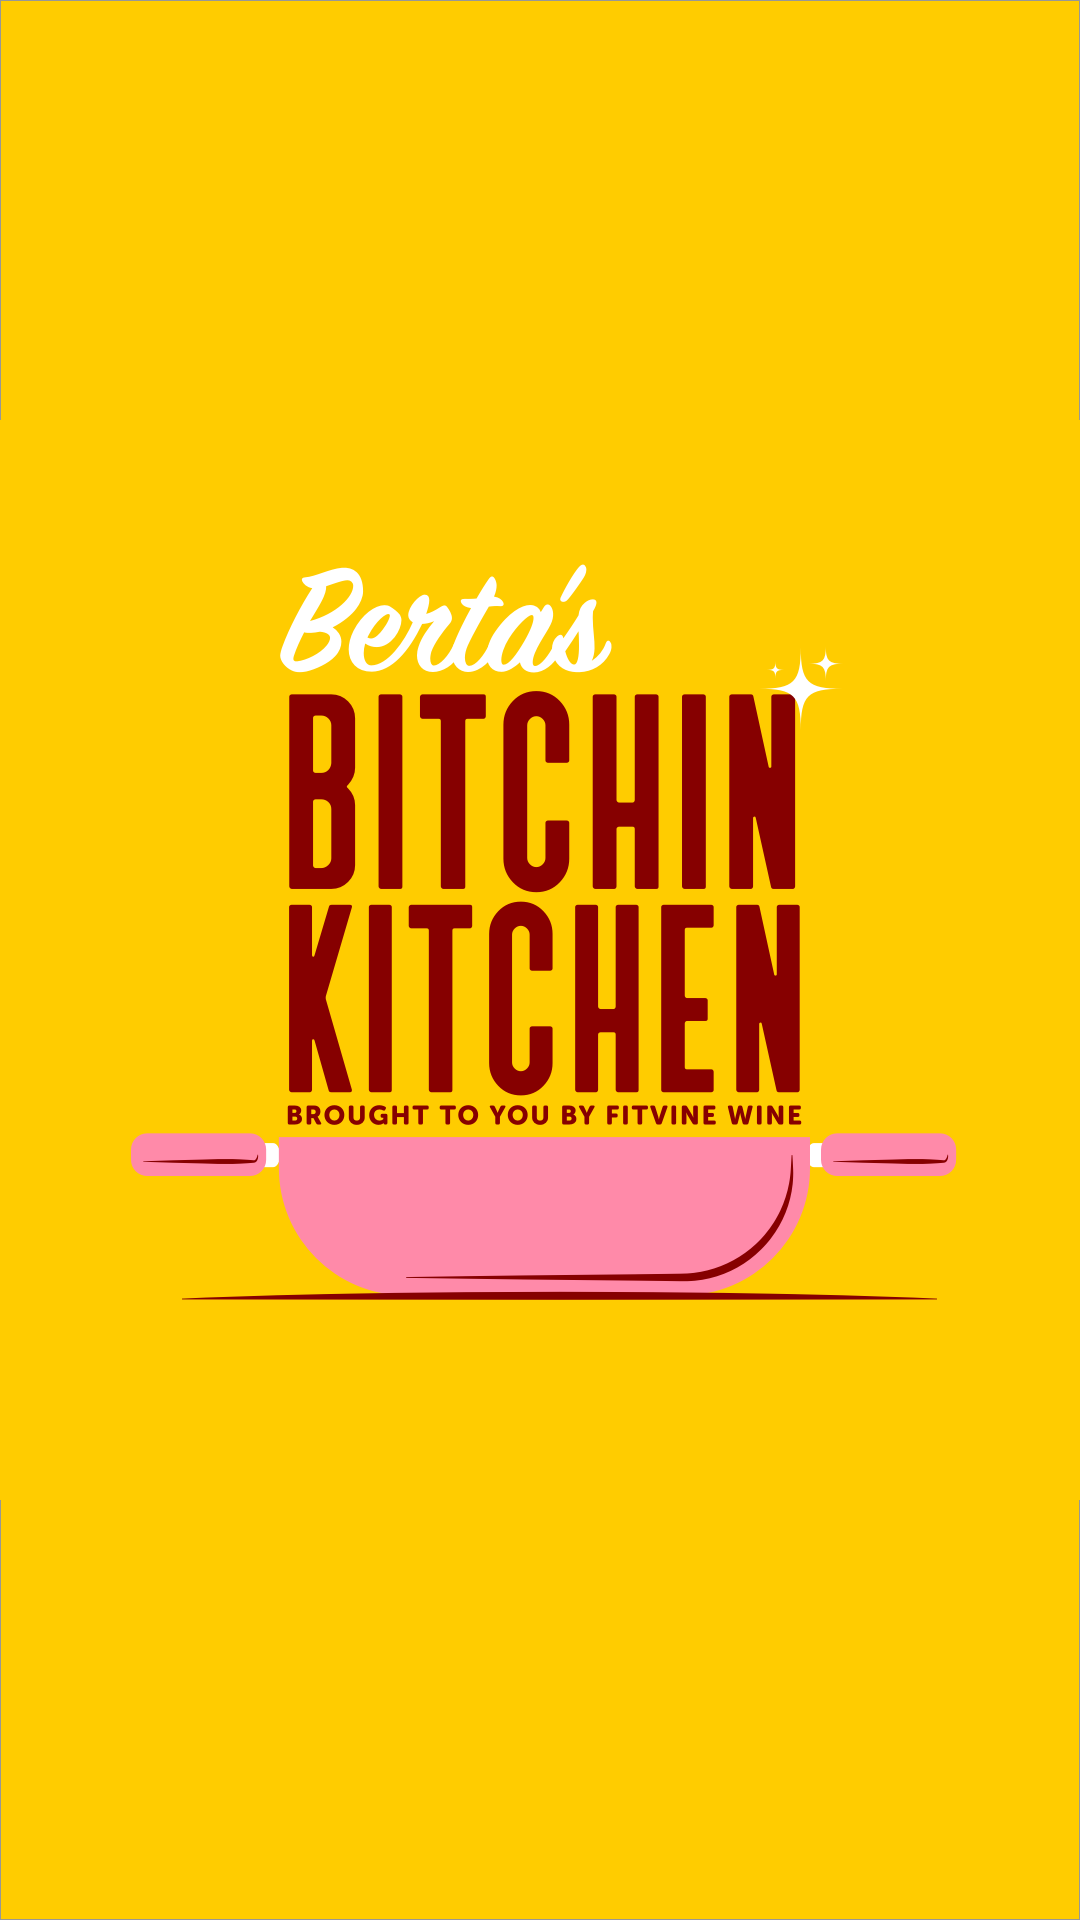 Roberta's Bitchin' Kitchen | Season Premier with Seema and Shrimp Scampi